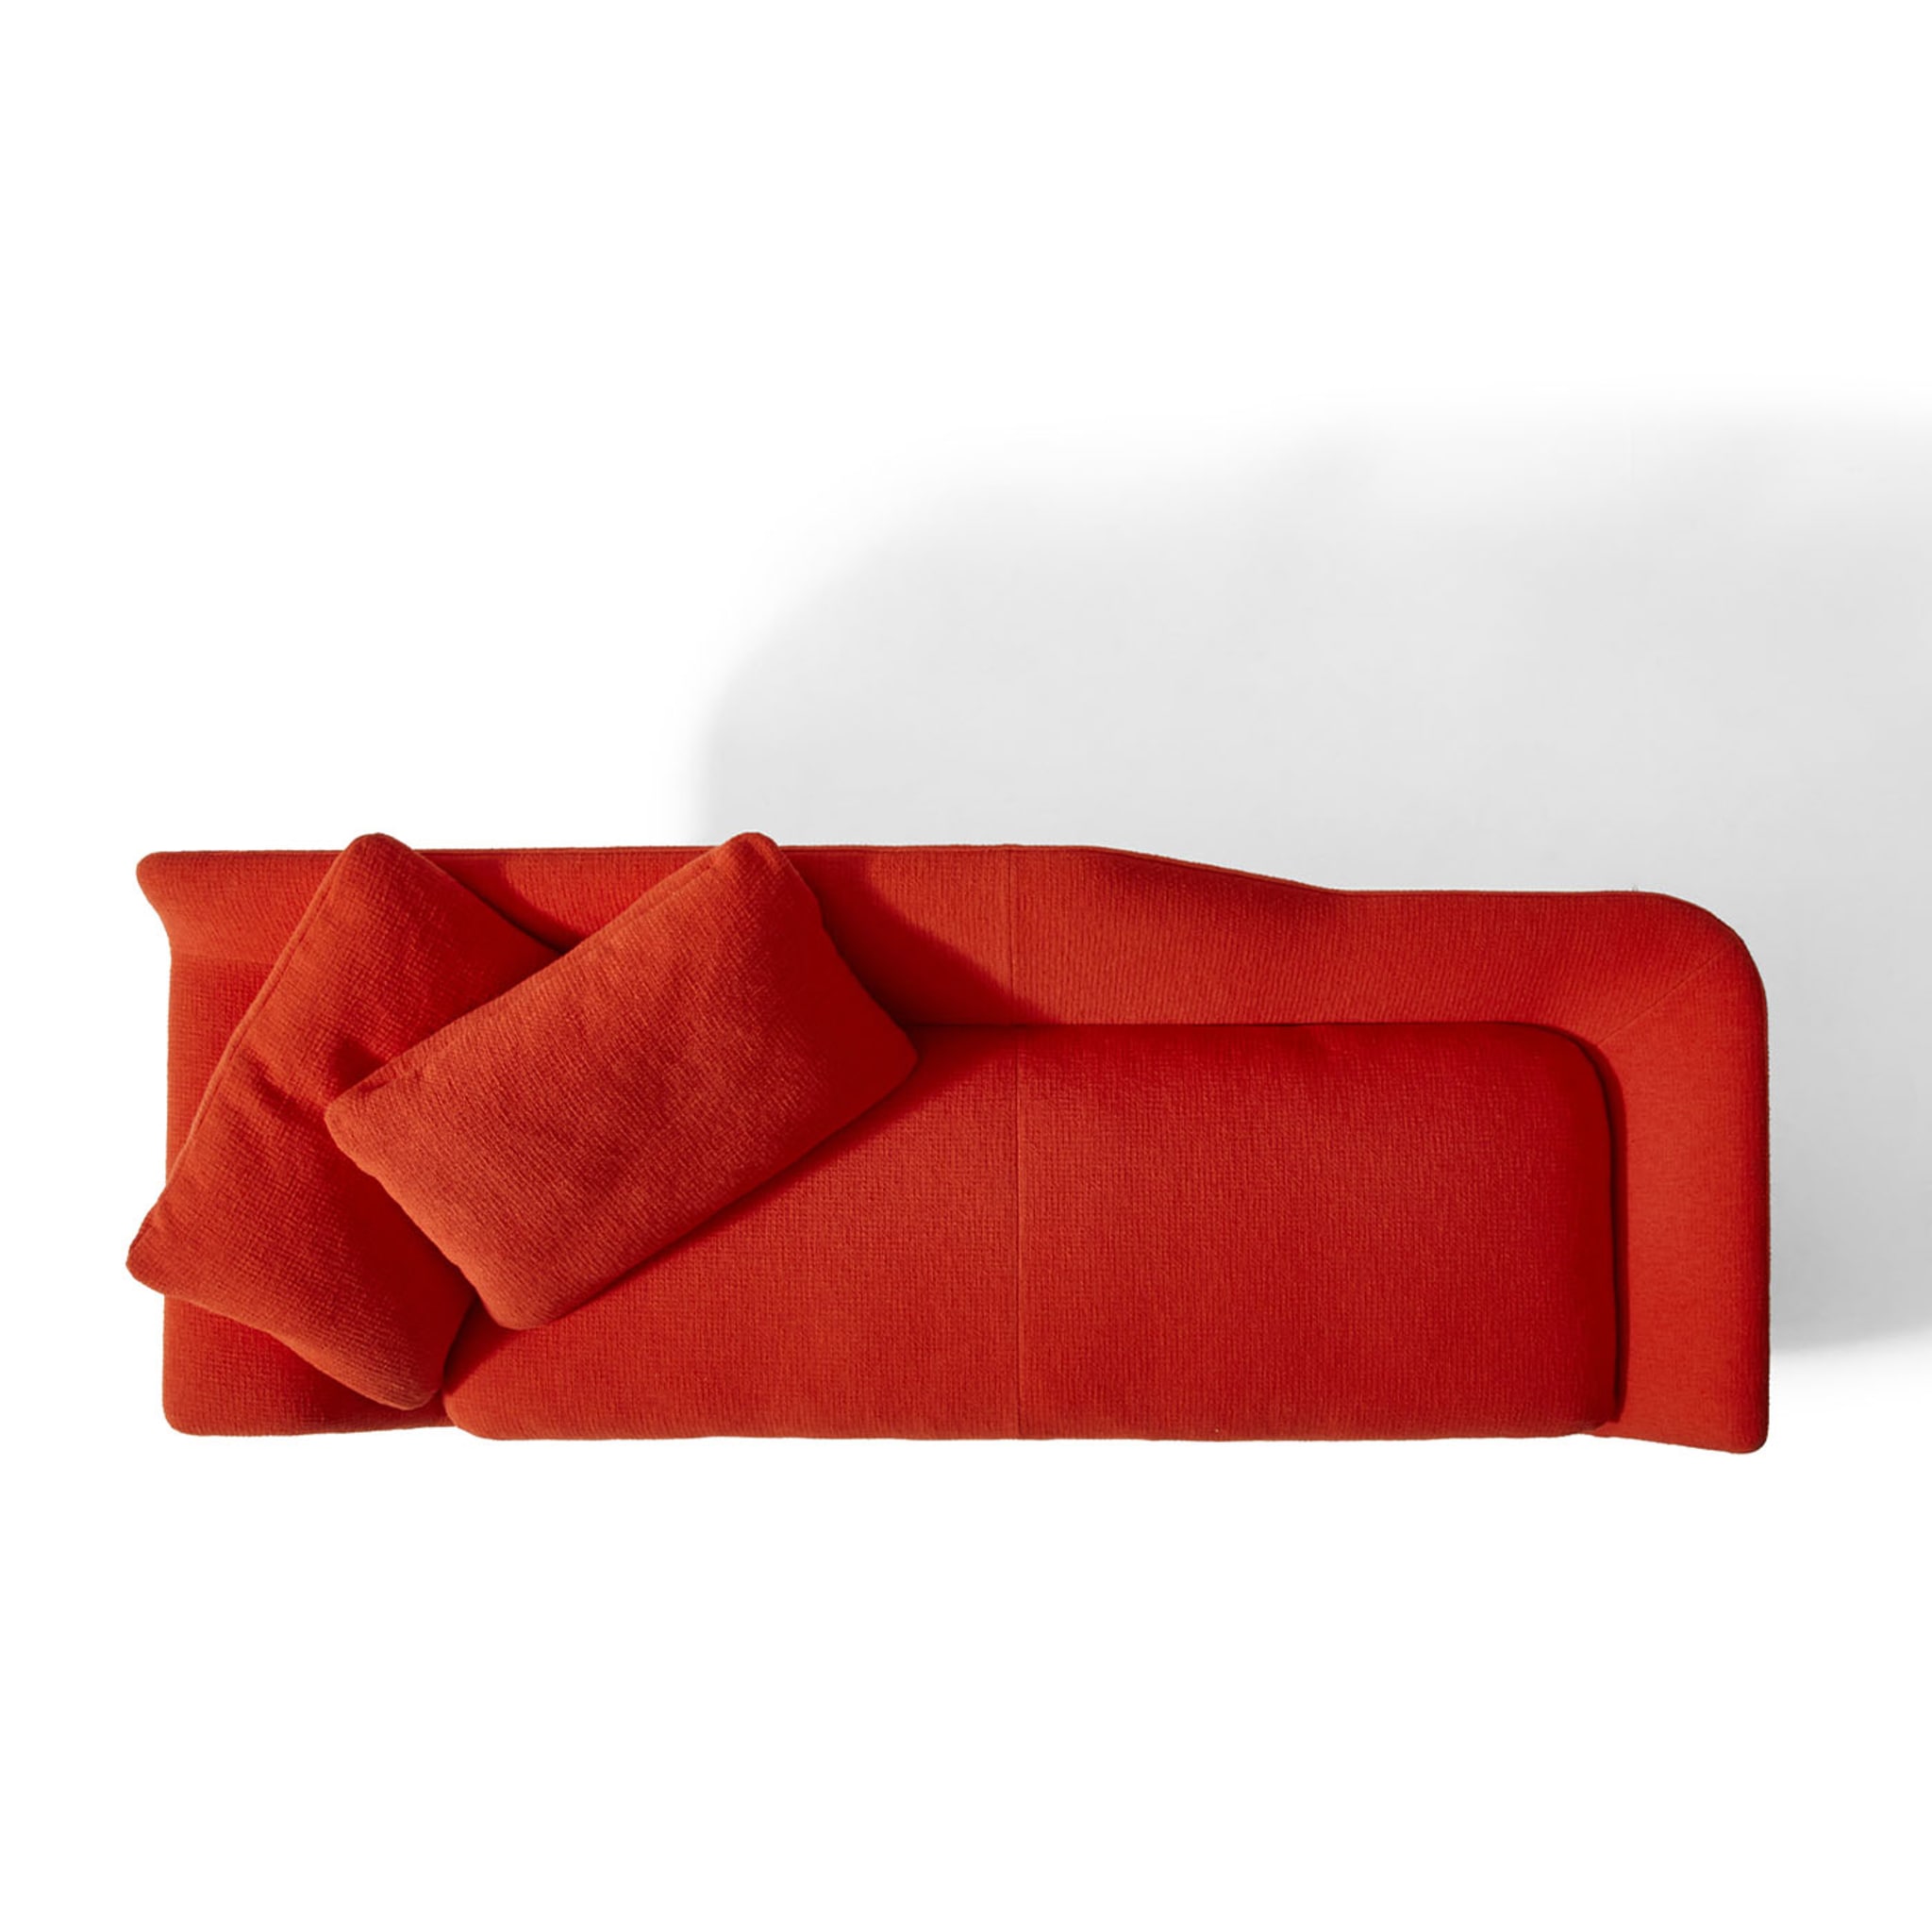 Esosoft Left-Sided 3-Seater Orange Sofa by Antonio Citterio   - Alternative view 1